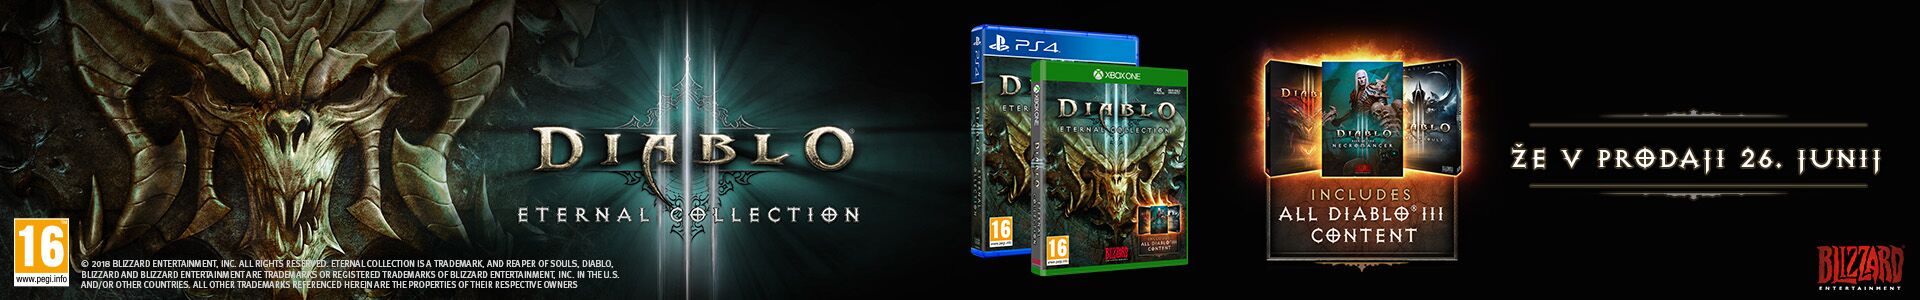 diablo 3 eternal collection gamestop